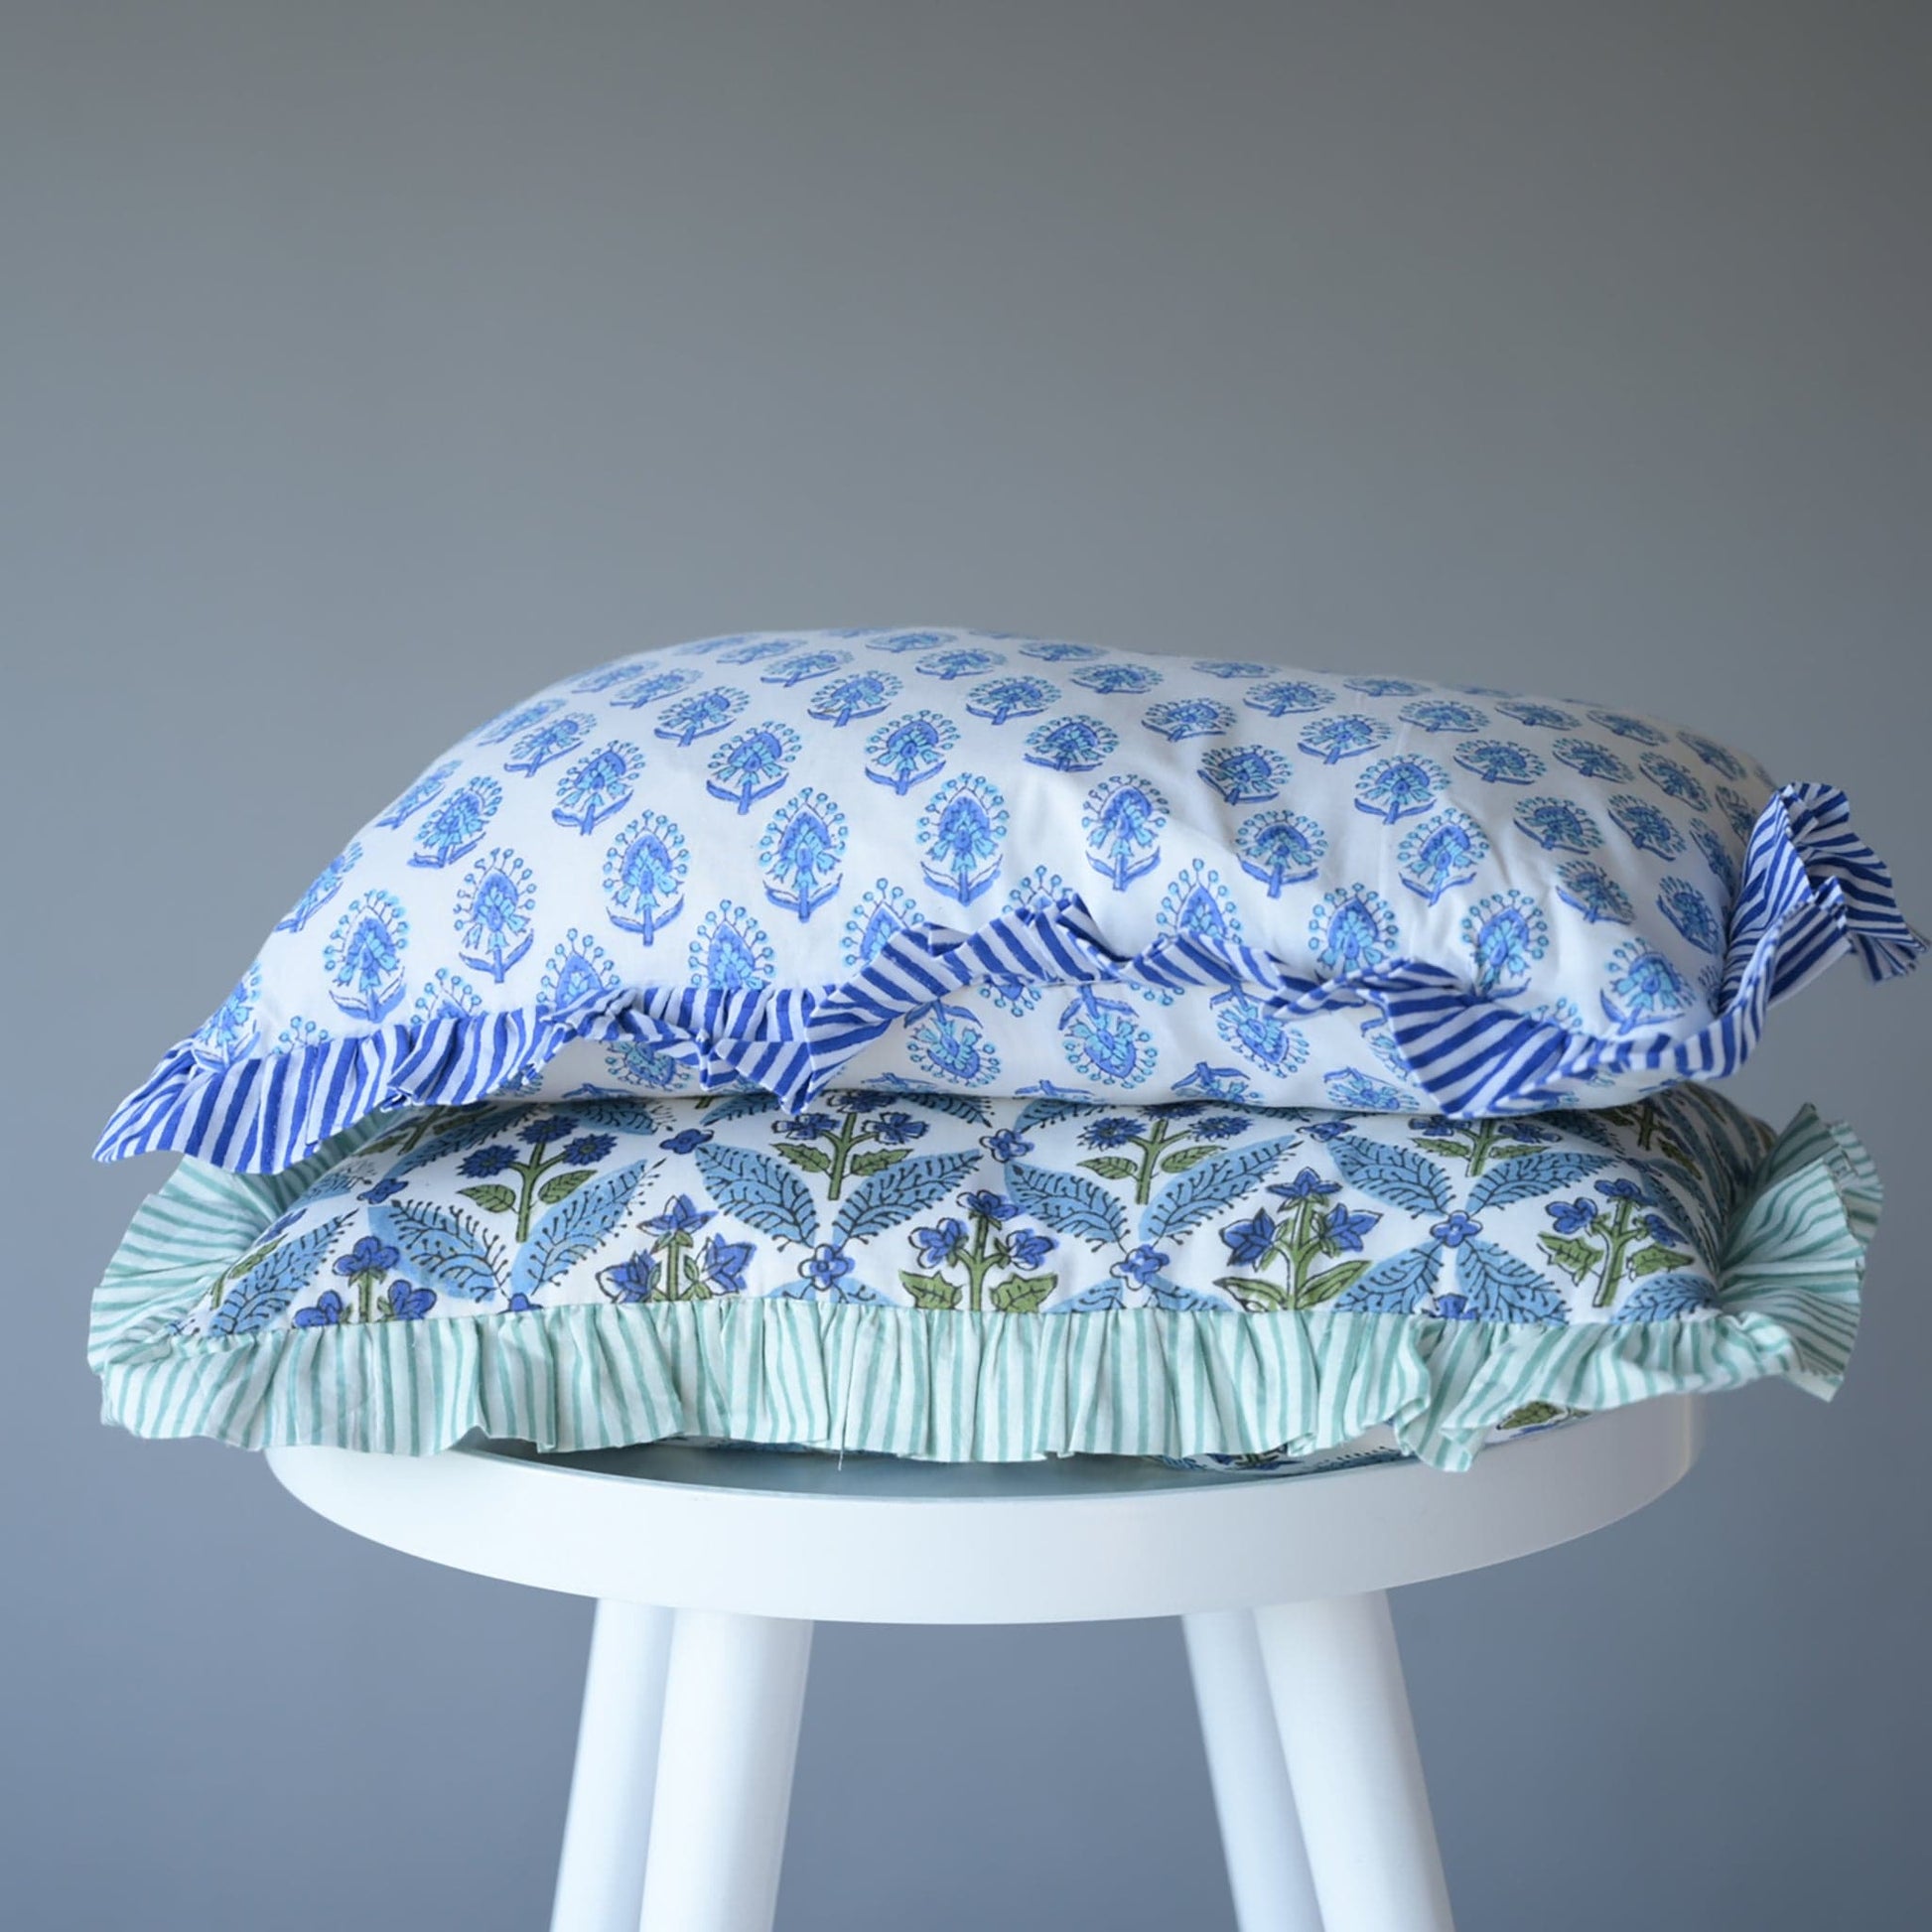 Cushions Small Ruffle Cushion - Blue Sea Spray Flowers 19134